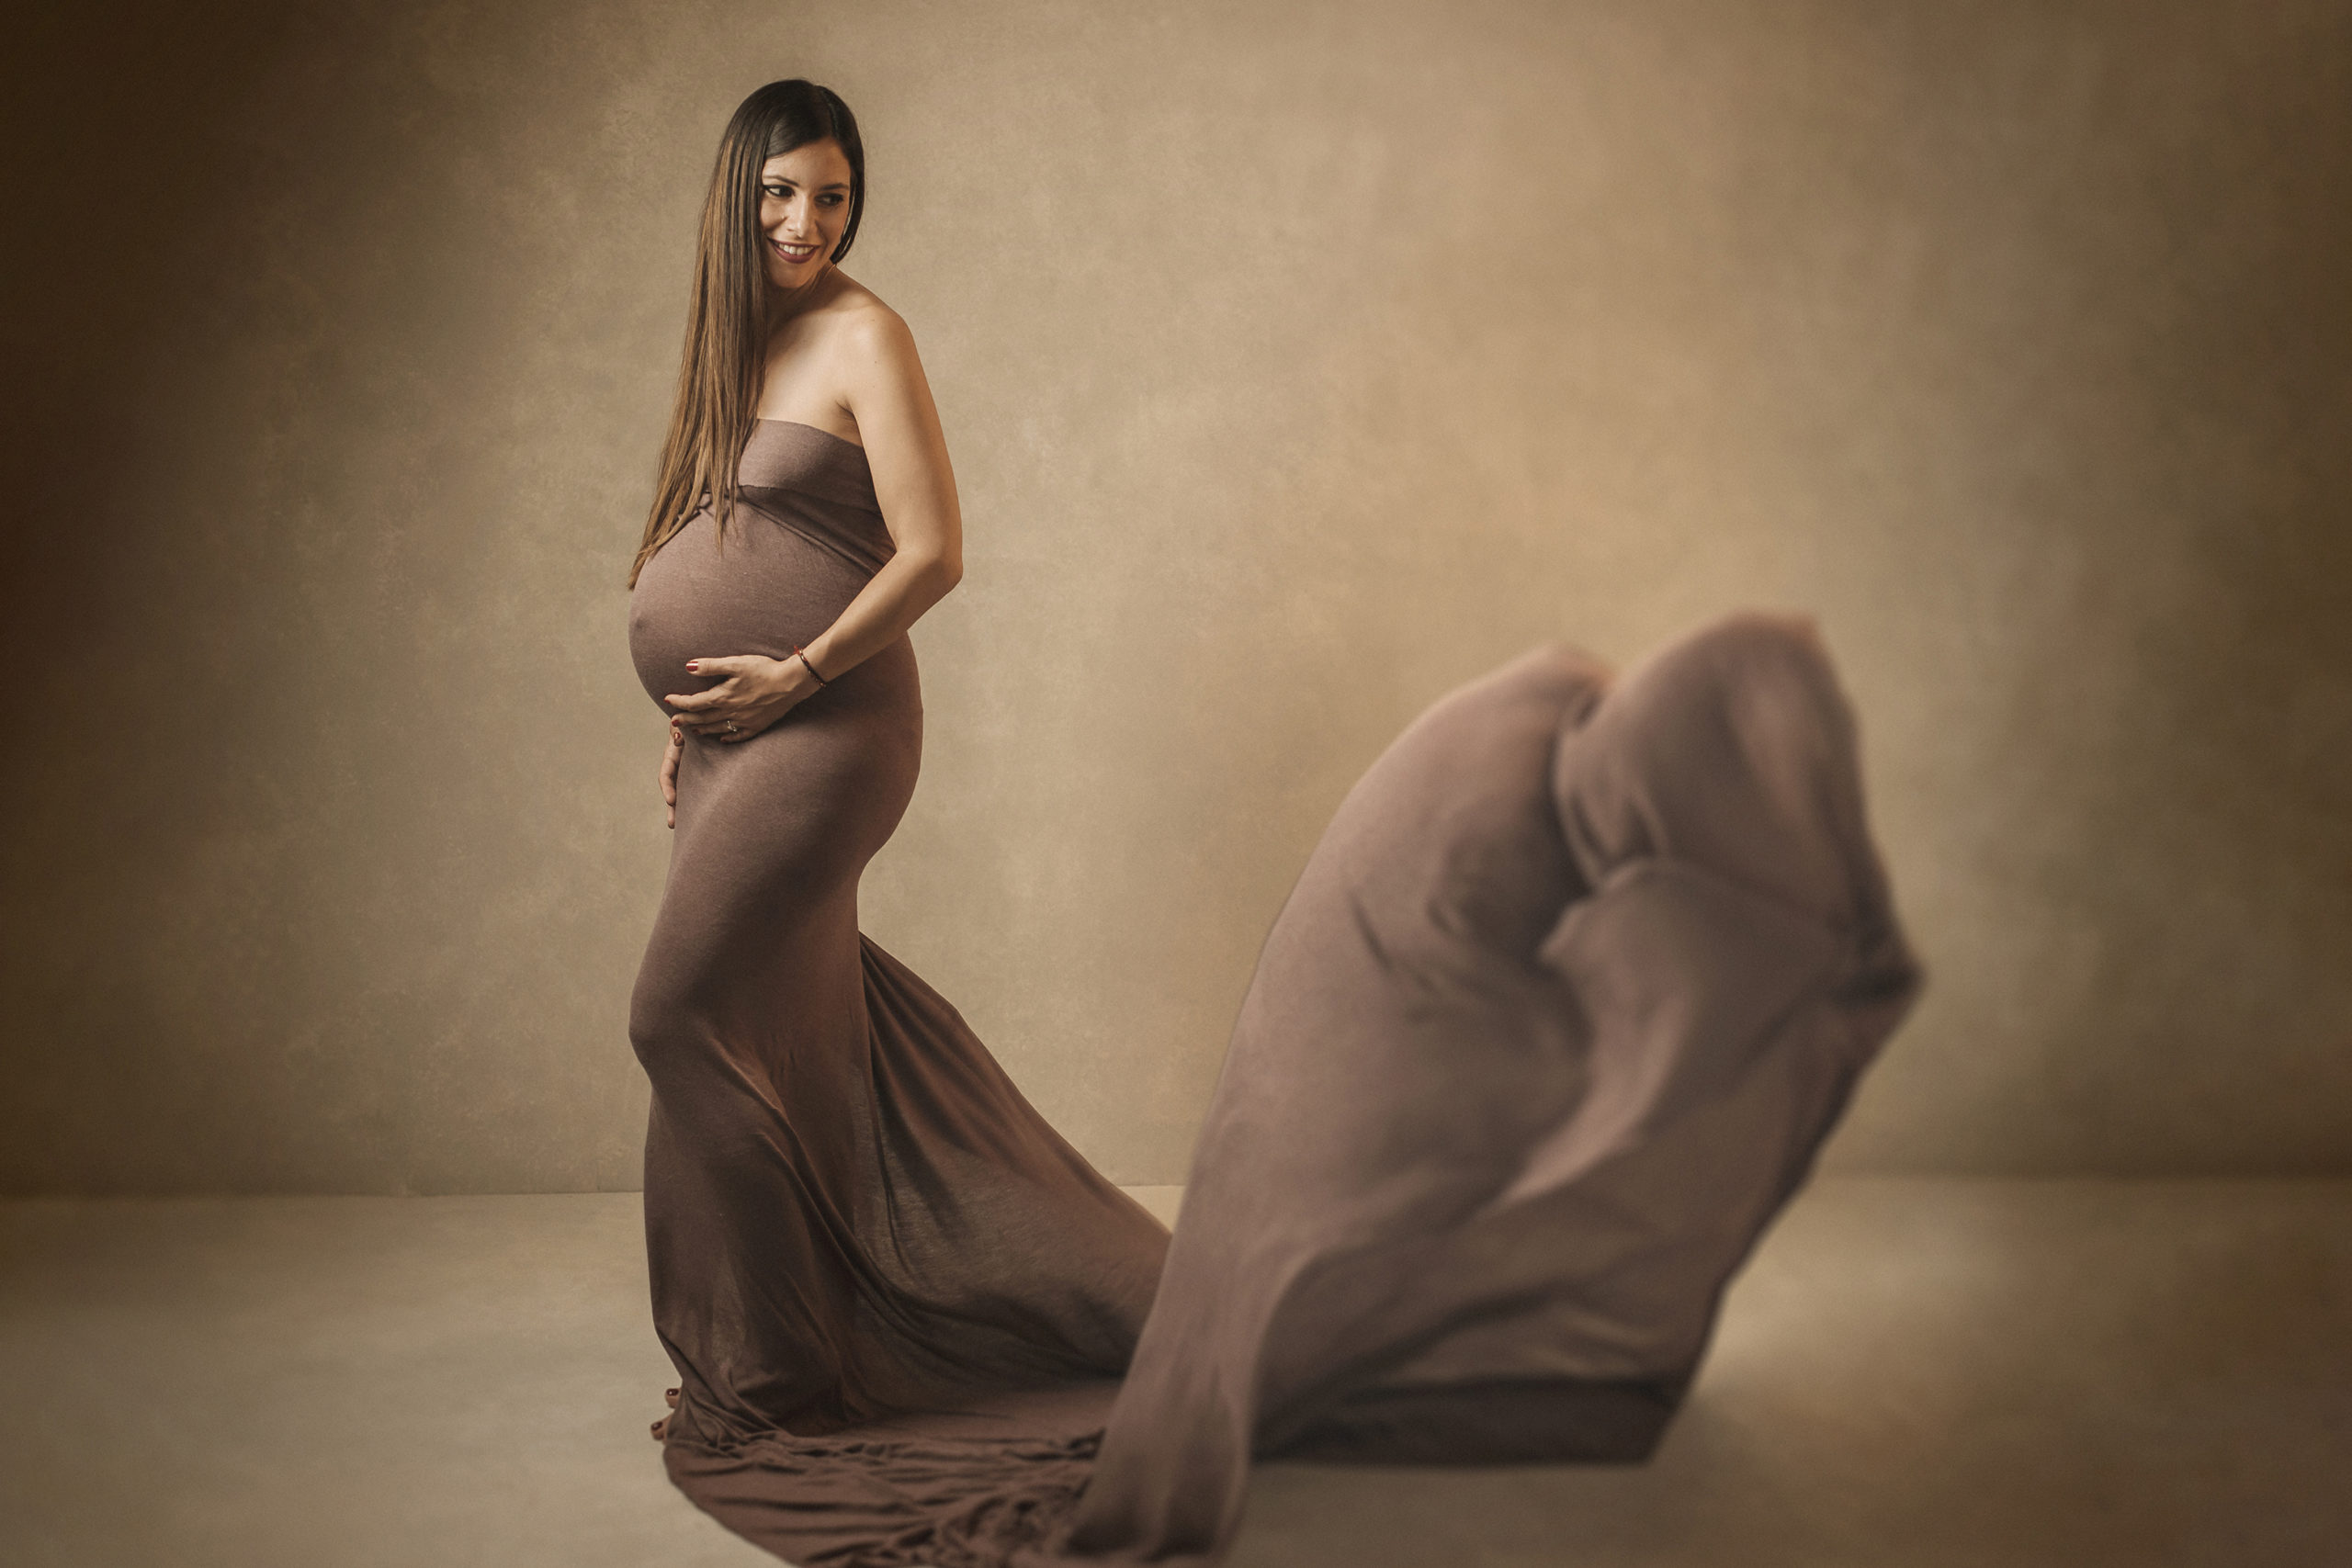 larga espera, embarazo de 9 meses, sesión de embarazo es estudio en zaragoza, sesión de embarazo en exterior en zaragoza, foto de embarazo de familia